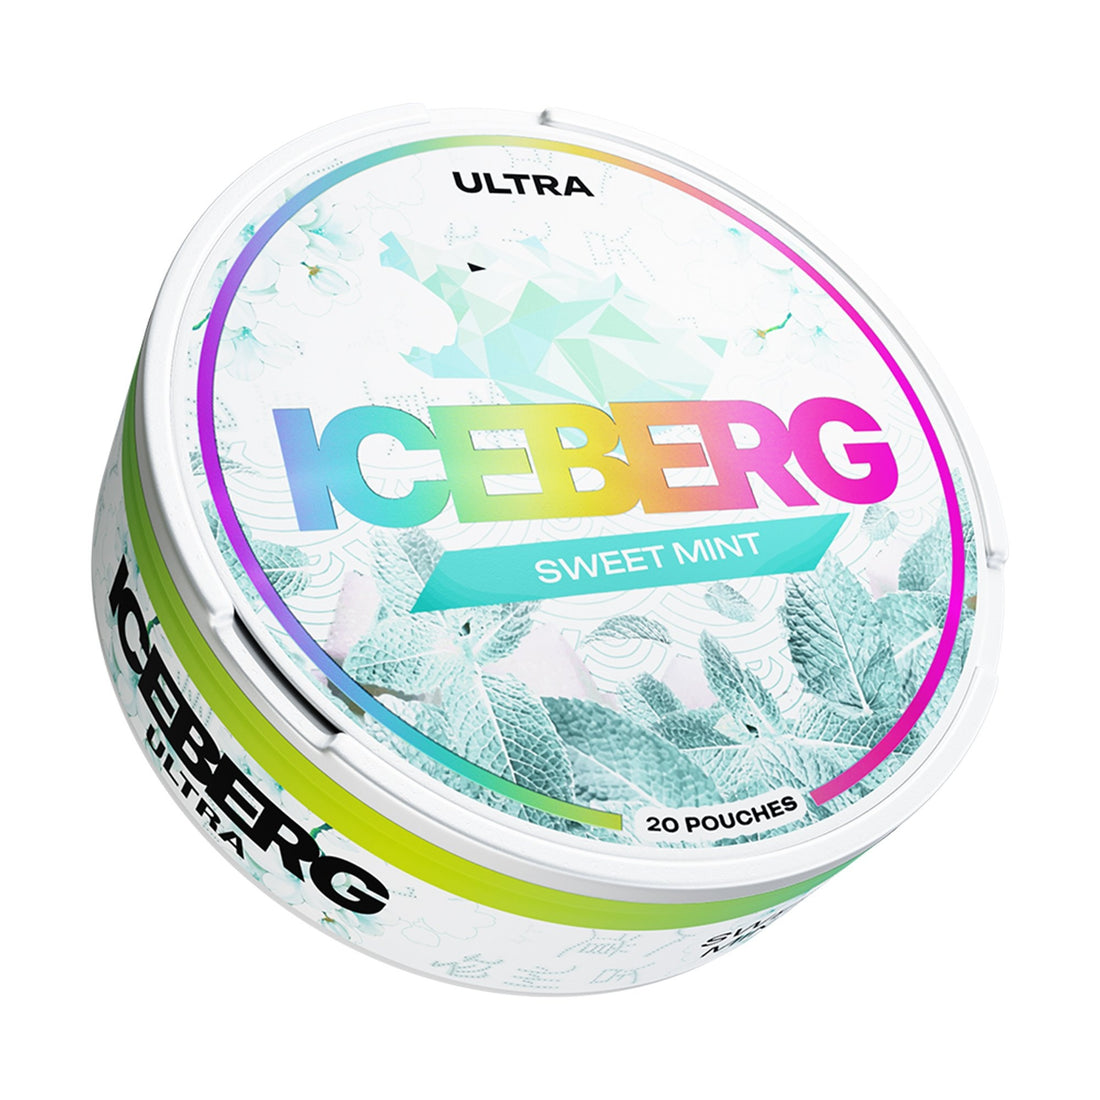 Iceberg Sweet Mint - 150mg – Snus Town